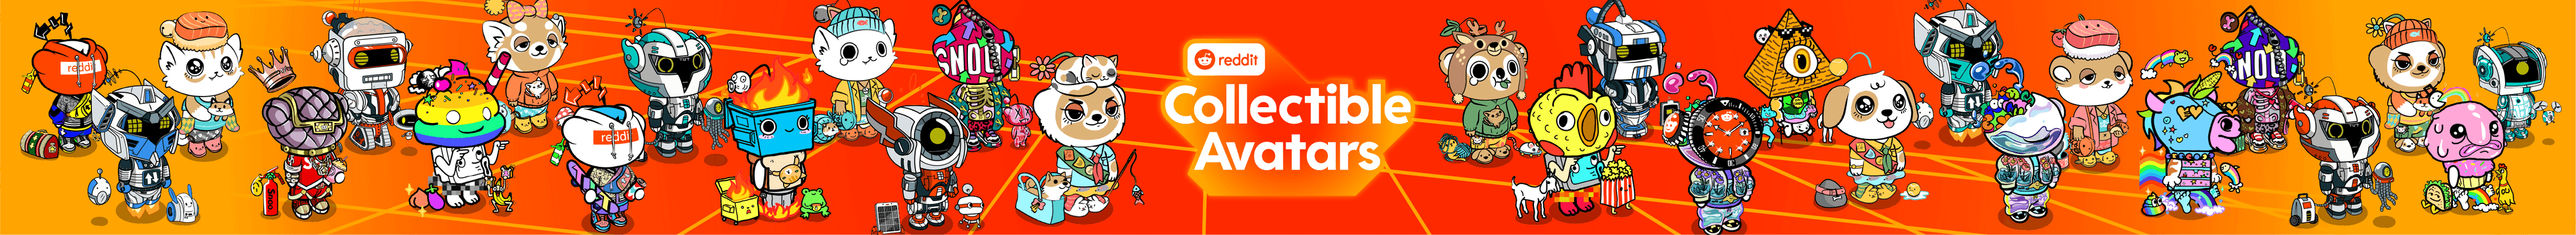 Aww Friends x Reddit Collectible Avatars